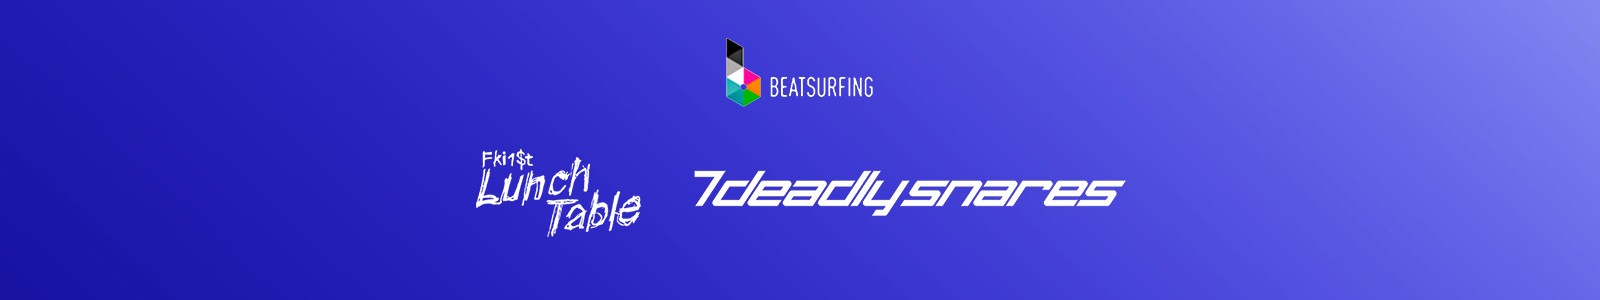 BeatSurfing 7DeadlySnares + LunchTable VST Bundle